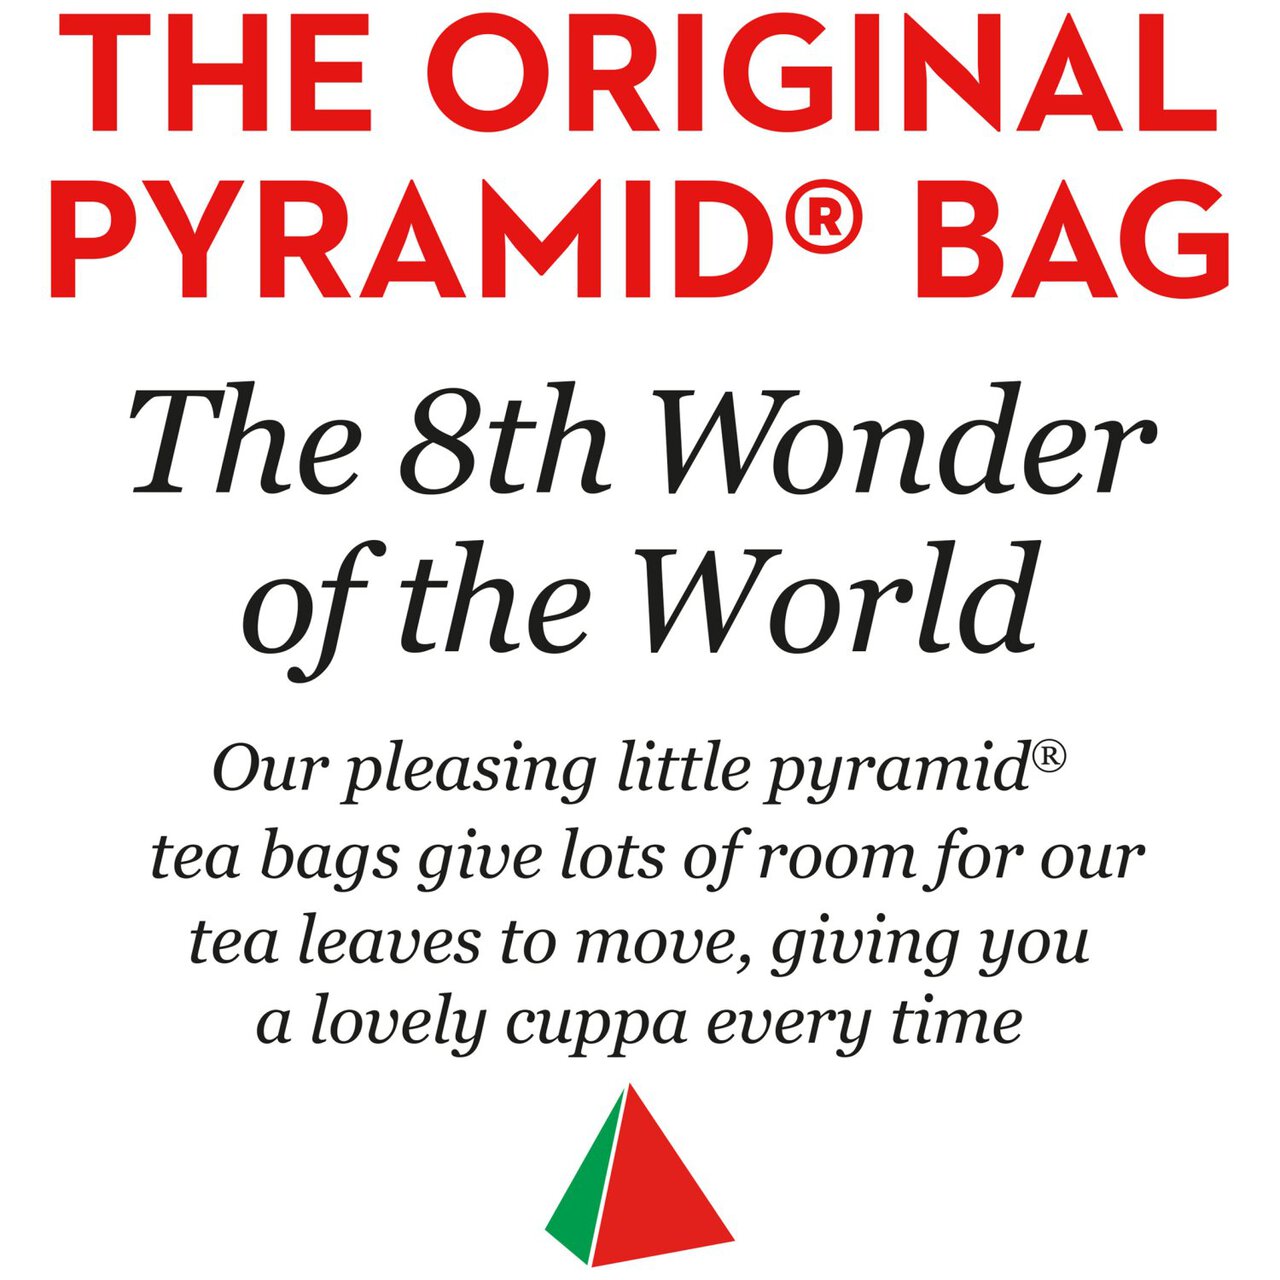 PG Tips The Tasty Decaf Tea Bags 70 per pack